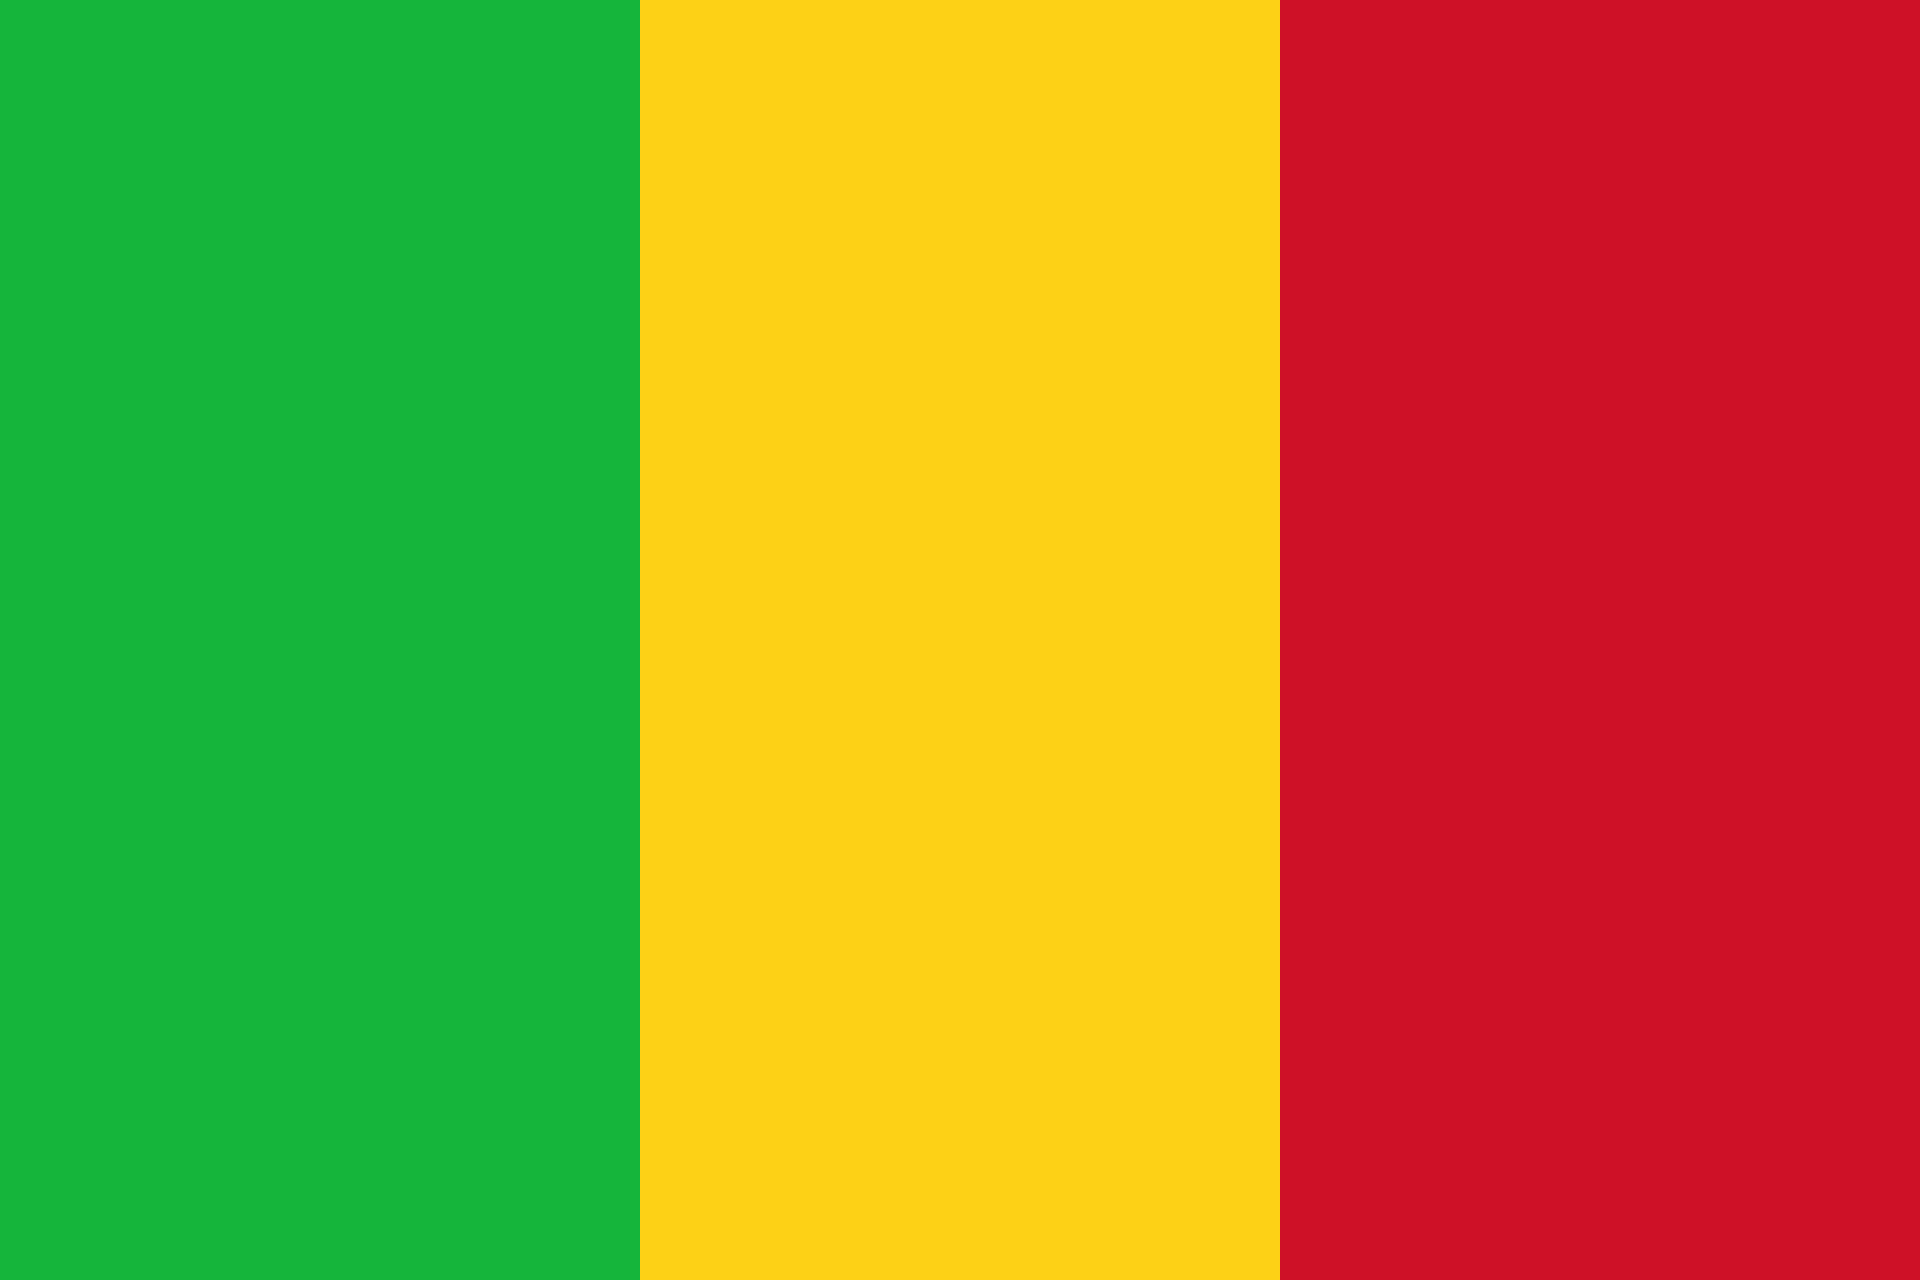 Mali-impose-durée-transition